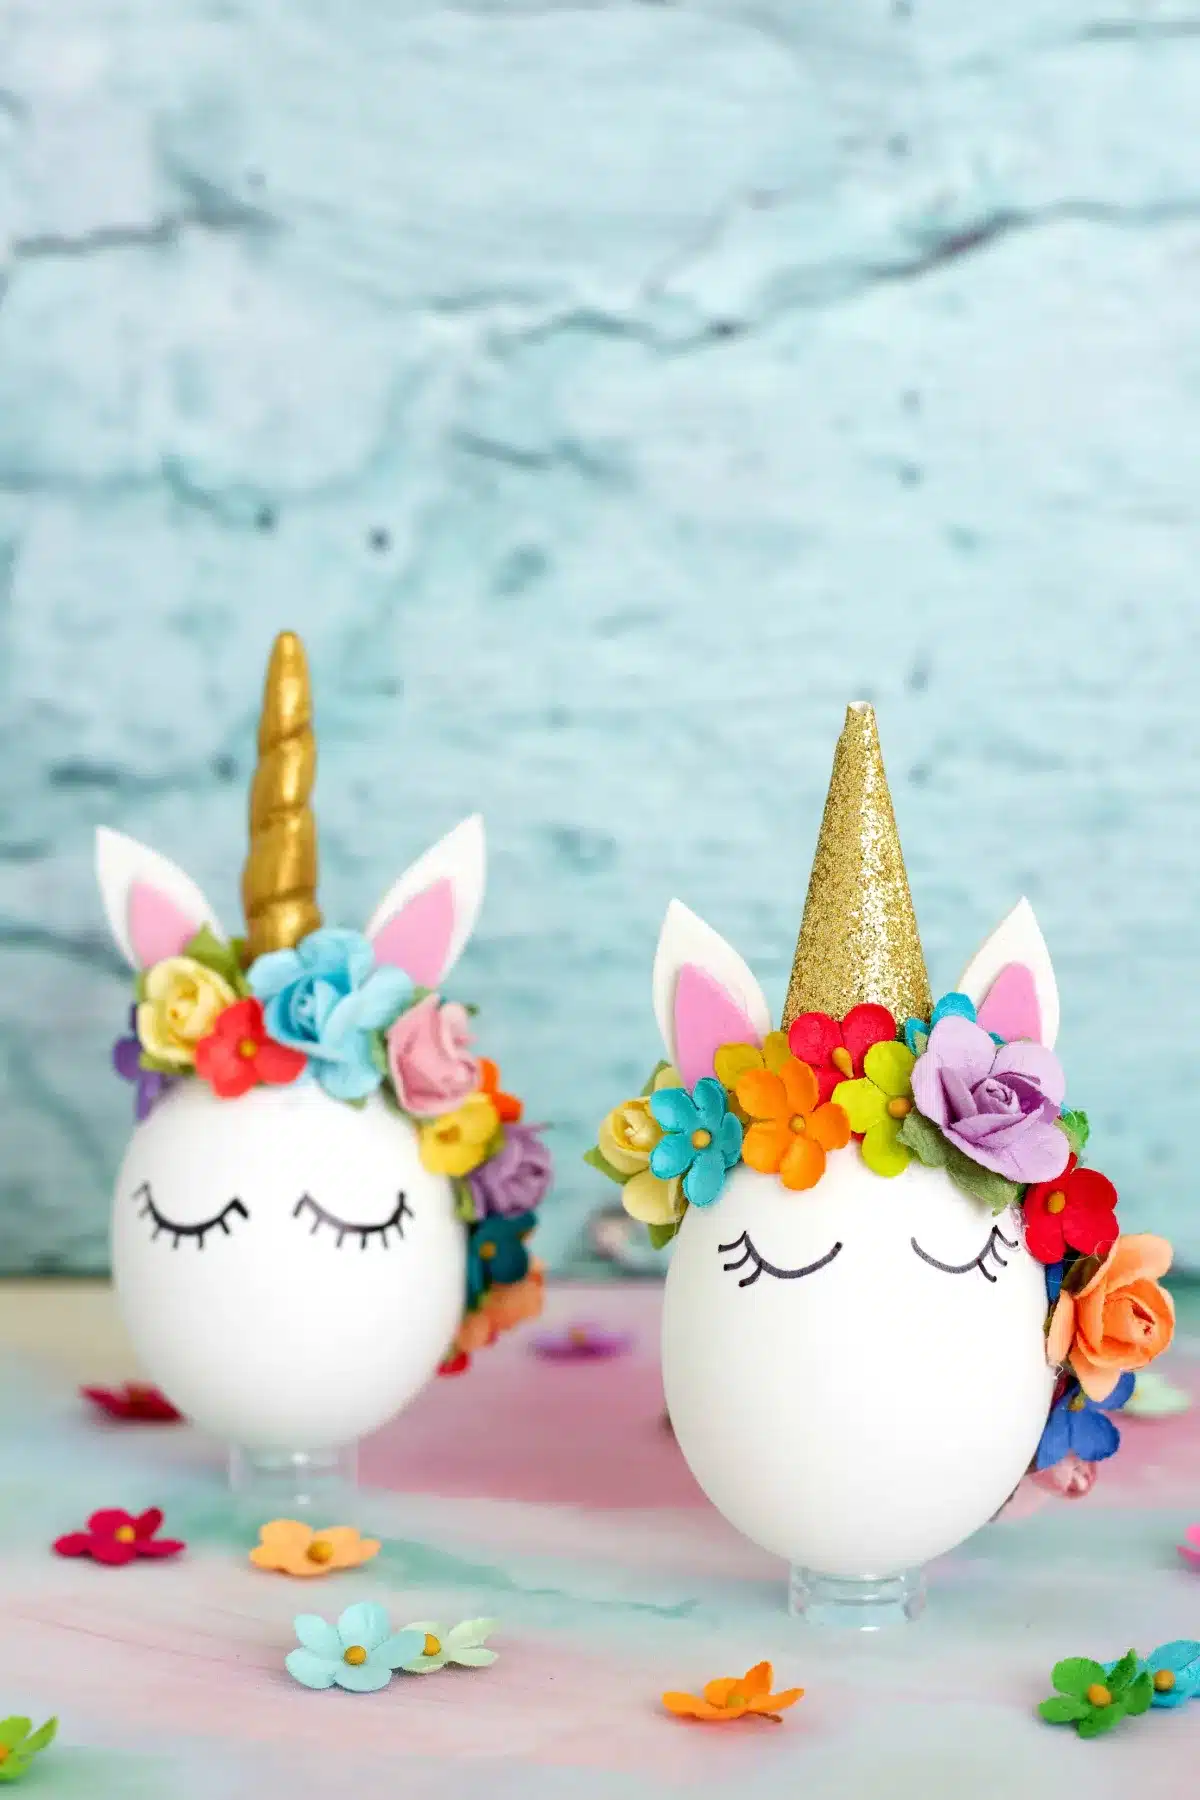 Two white eggs decorated like unicorns.